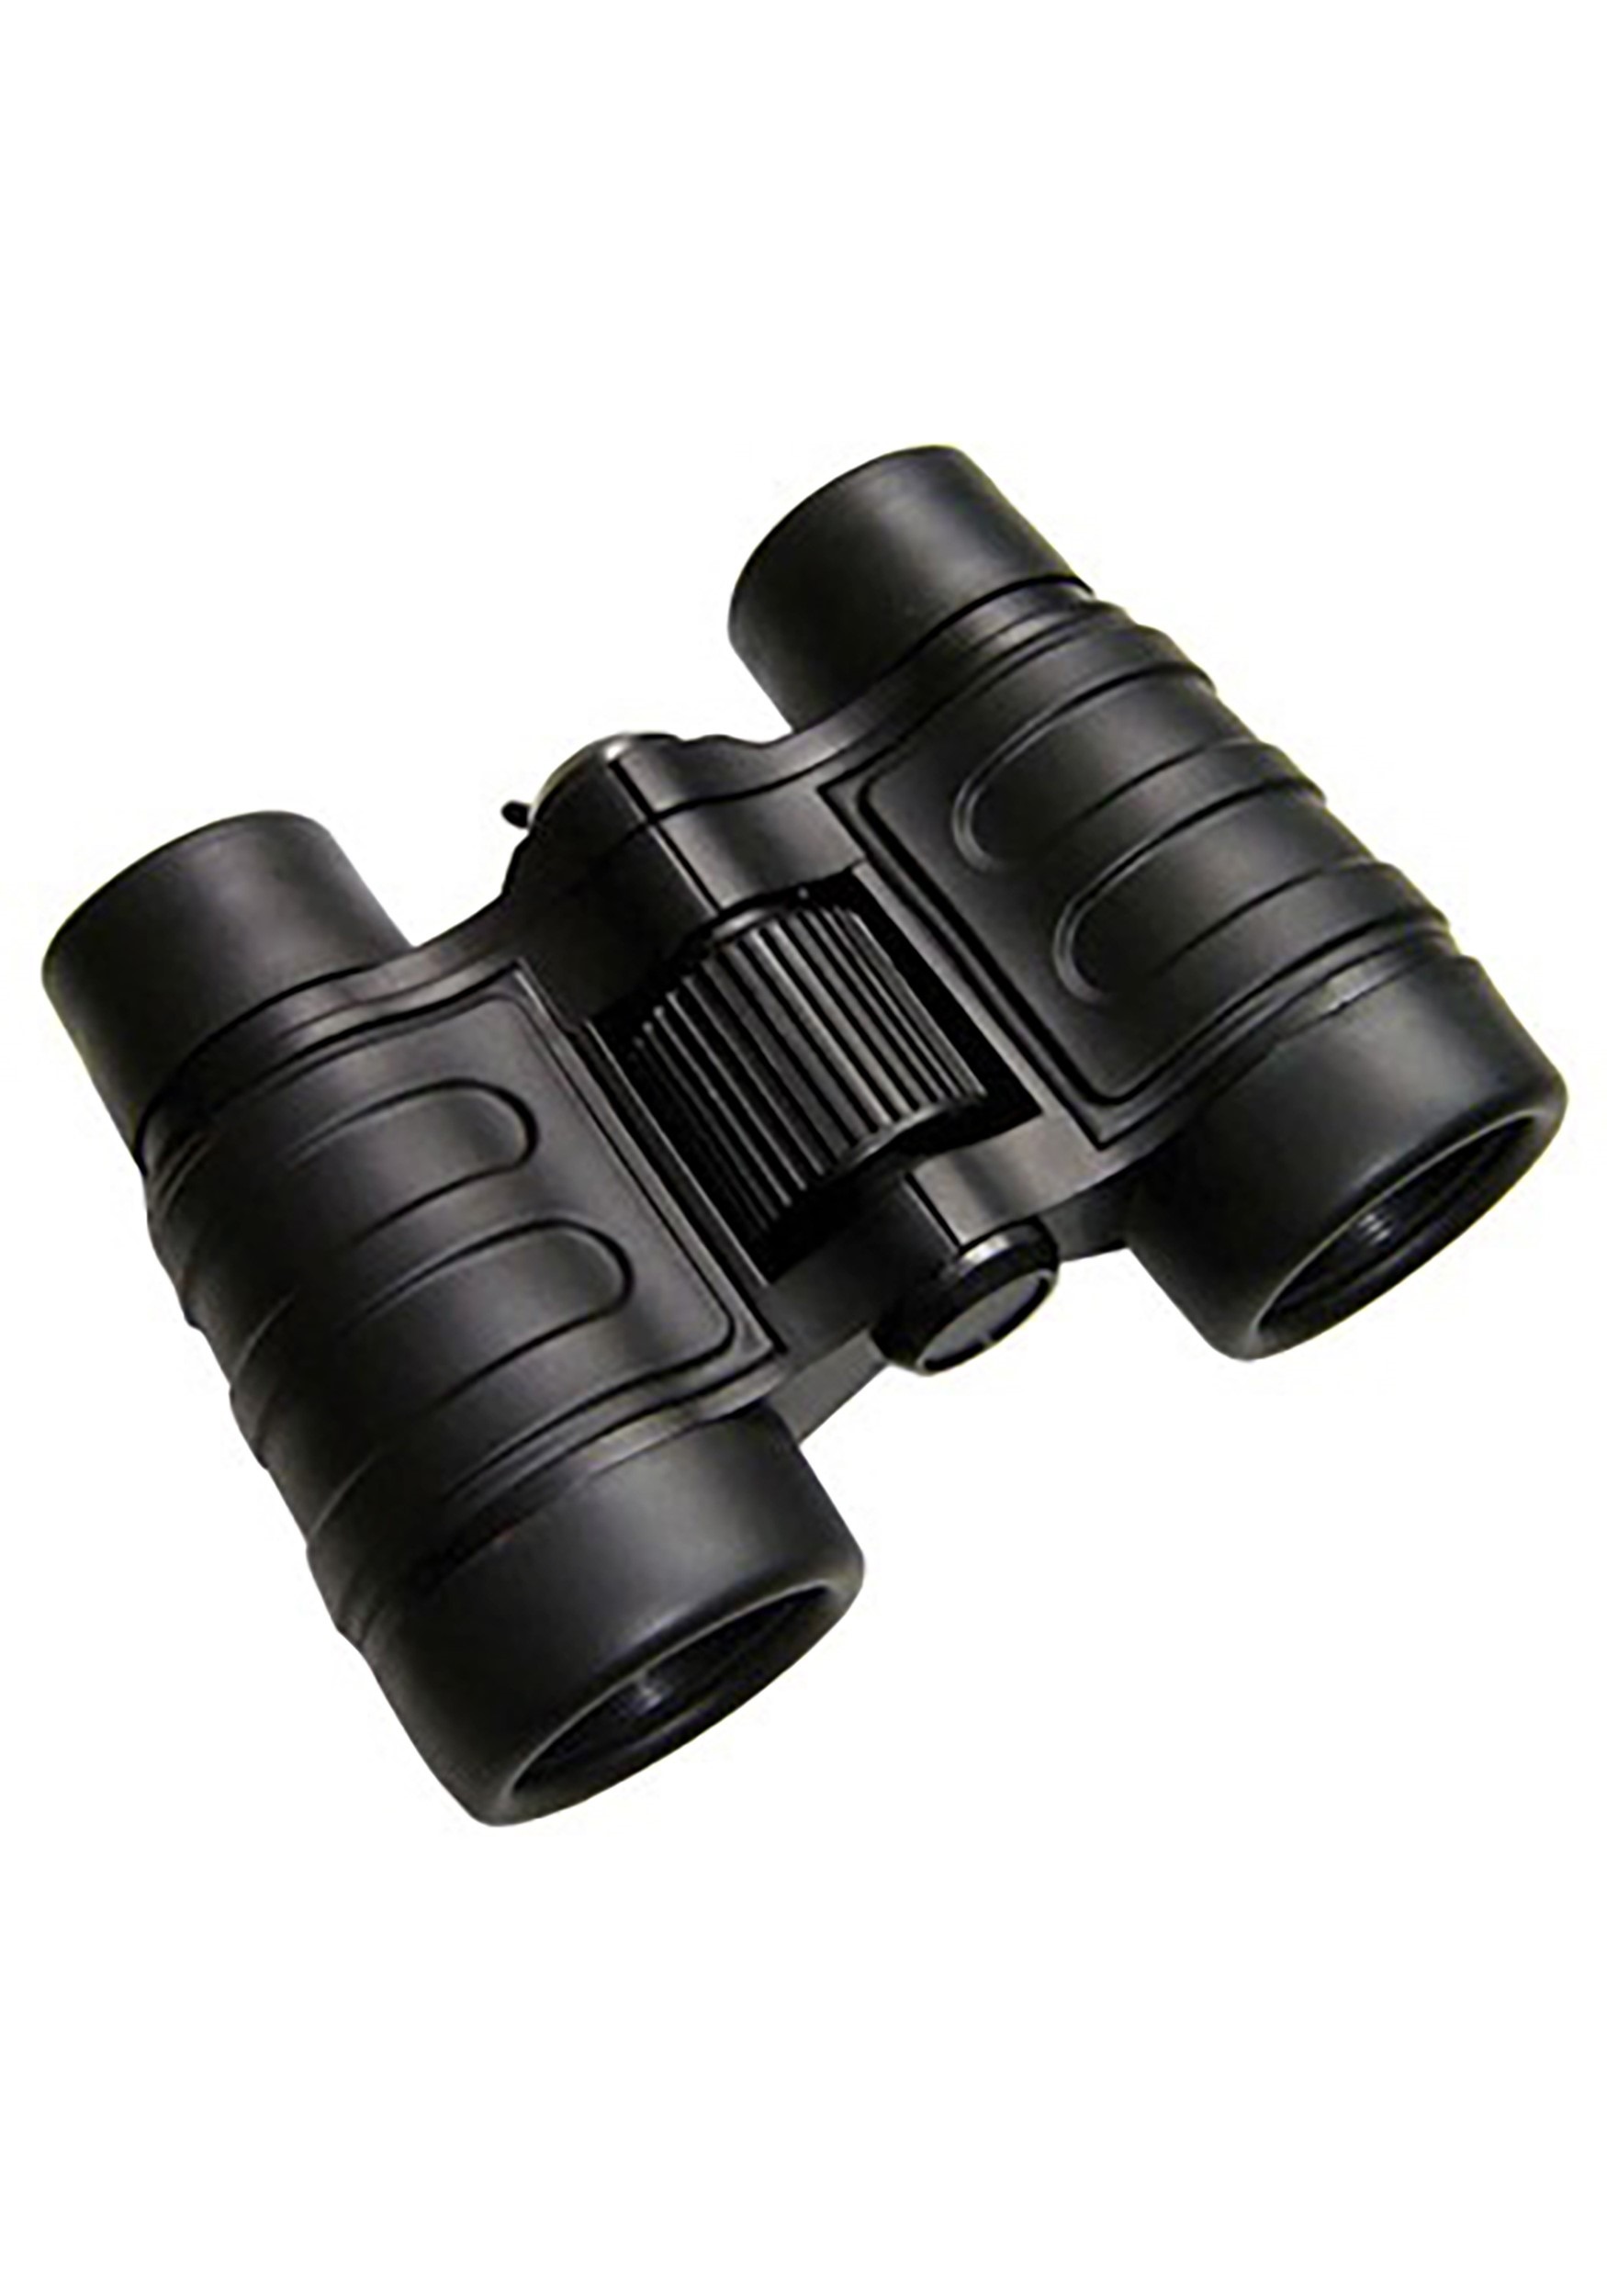 Black Dilwe Binoculars Toy,Binoculars Outdoor Military Games Toys for Children Children Binoculars